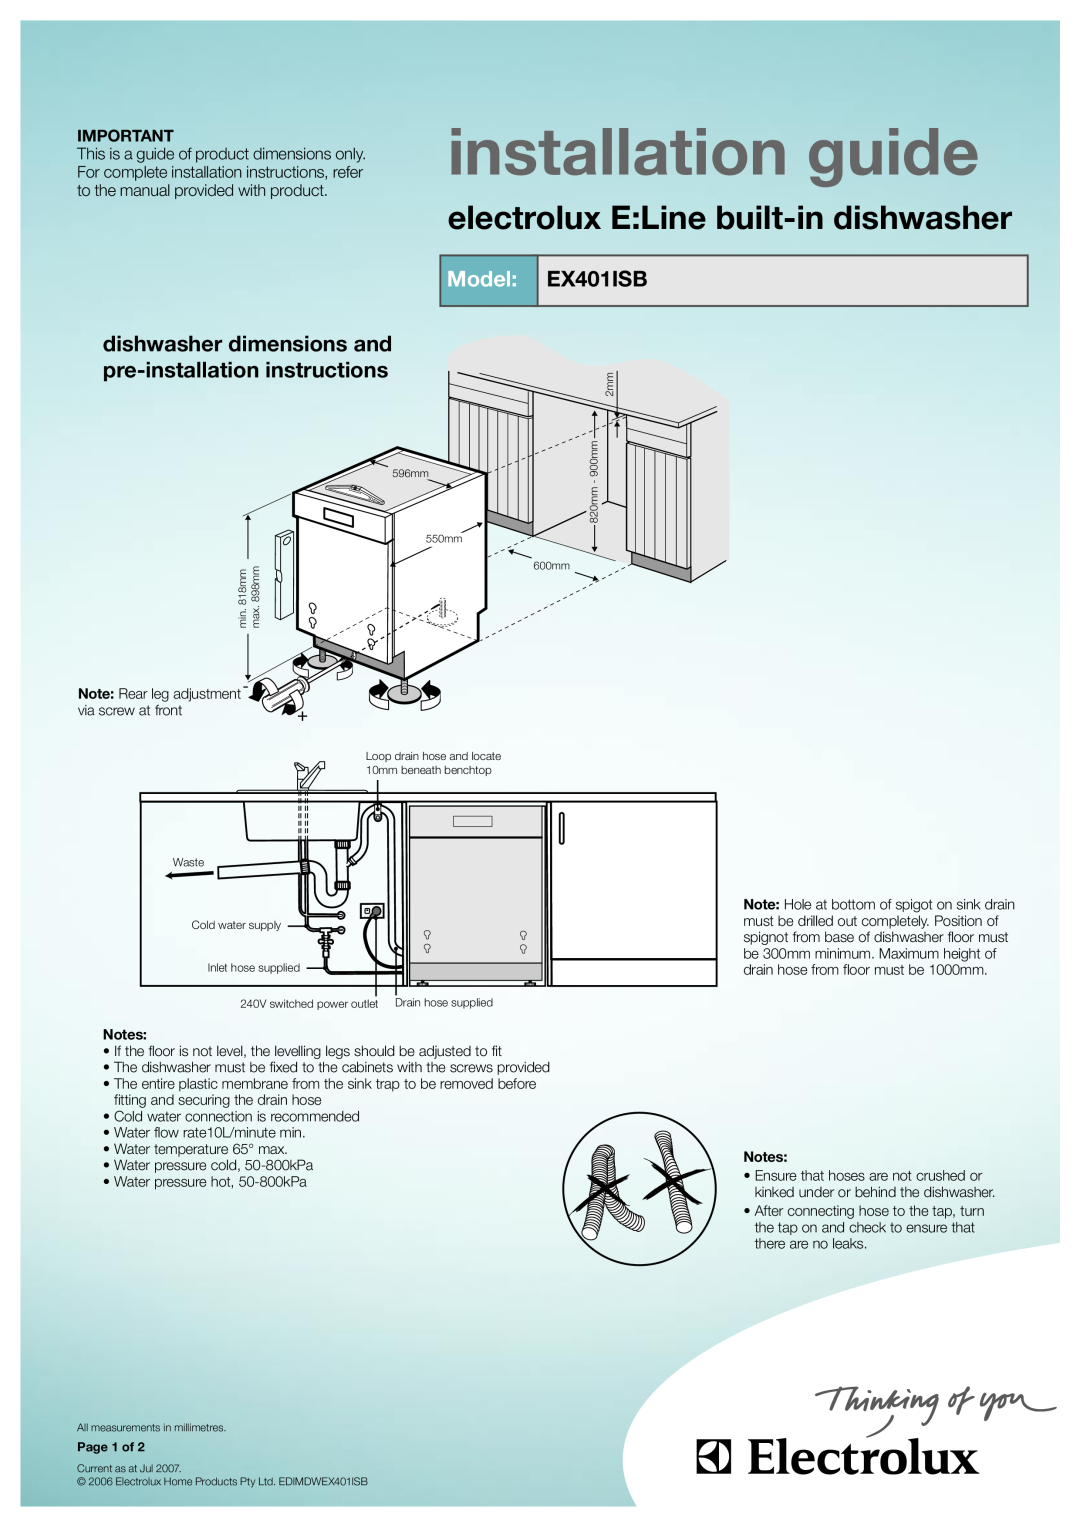 Electrolux dimensions installation guide, electrolux ELine built-in dishwasher, Model EX401ISB 